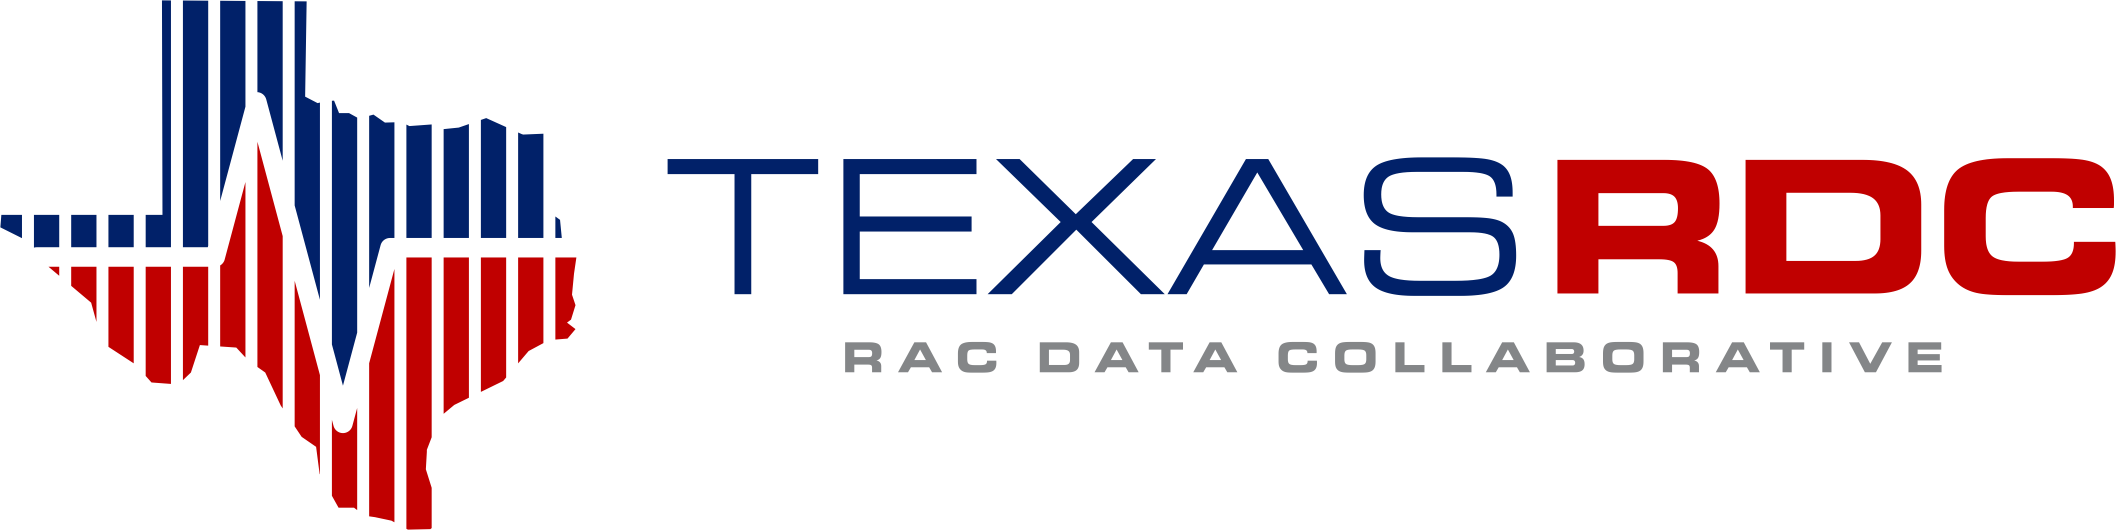 Texas RAC Data Collaborative